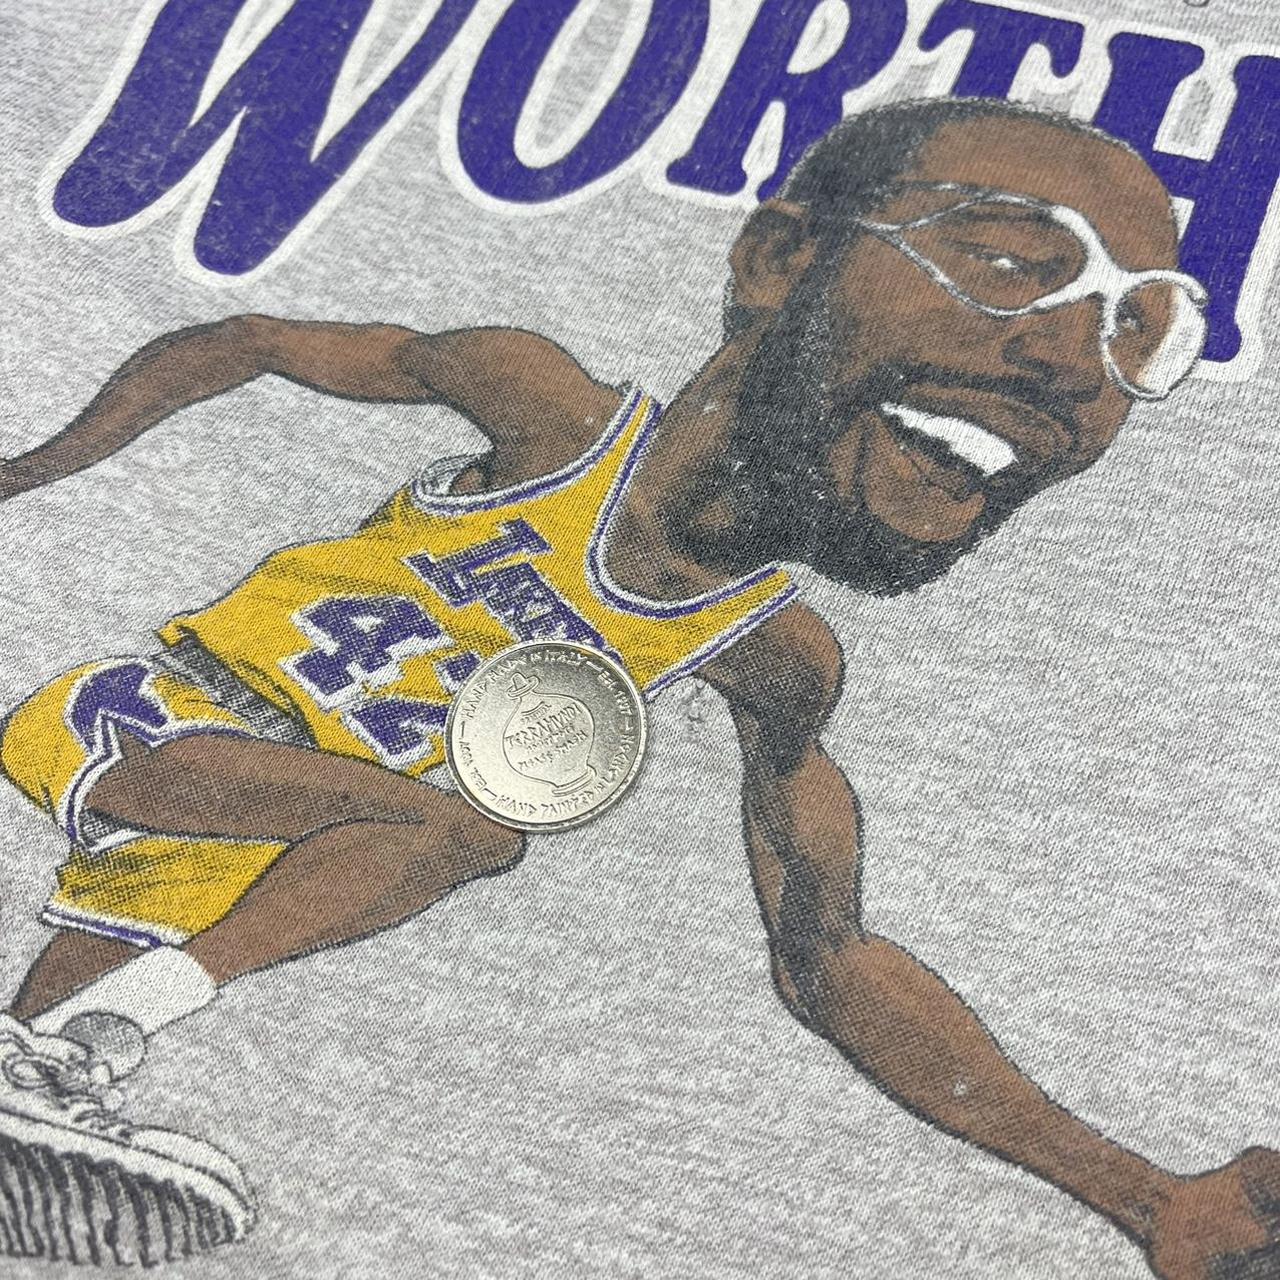 Vintage Los Angeles Lakers James Worthy Shirt Size Medium